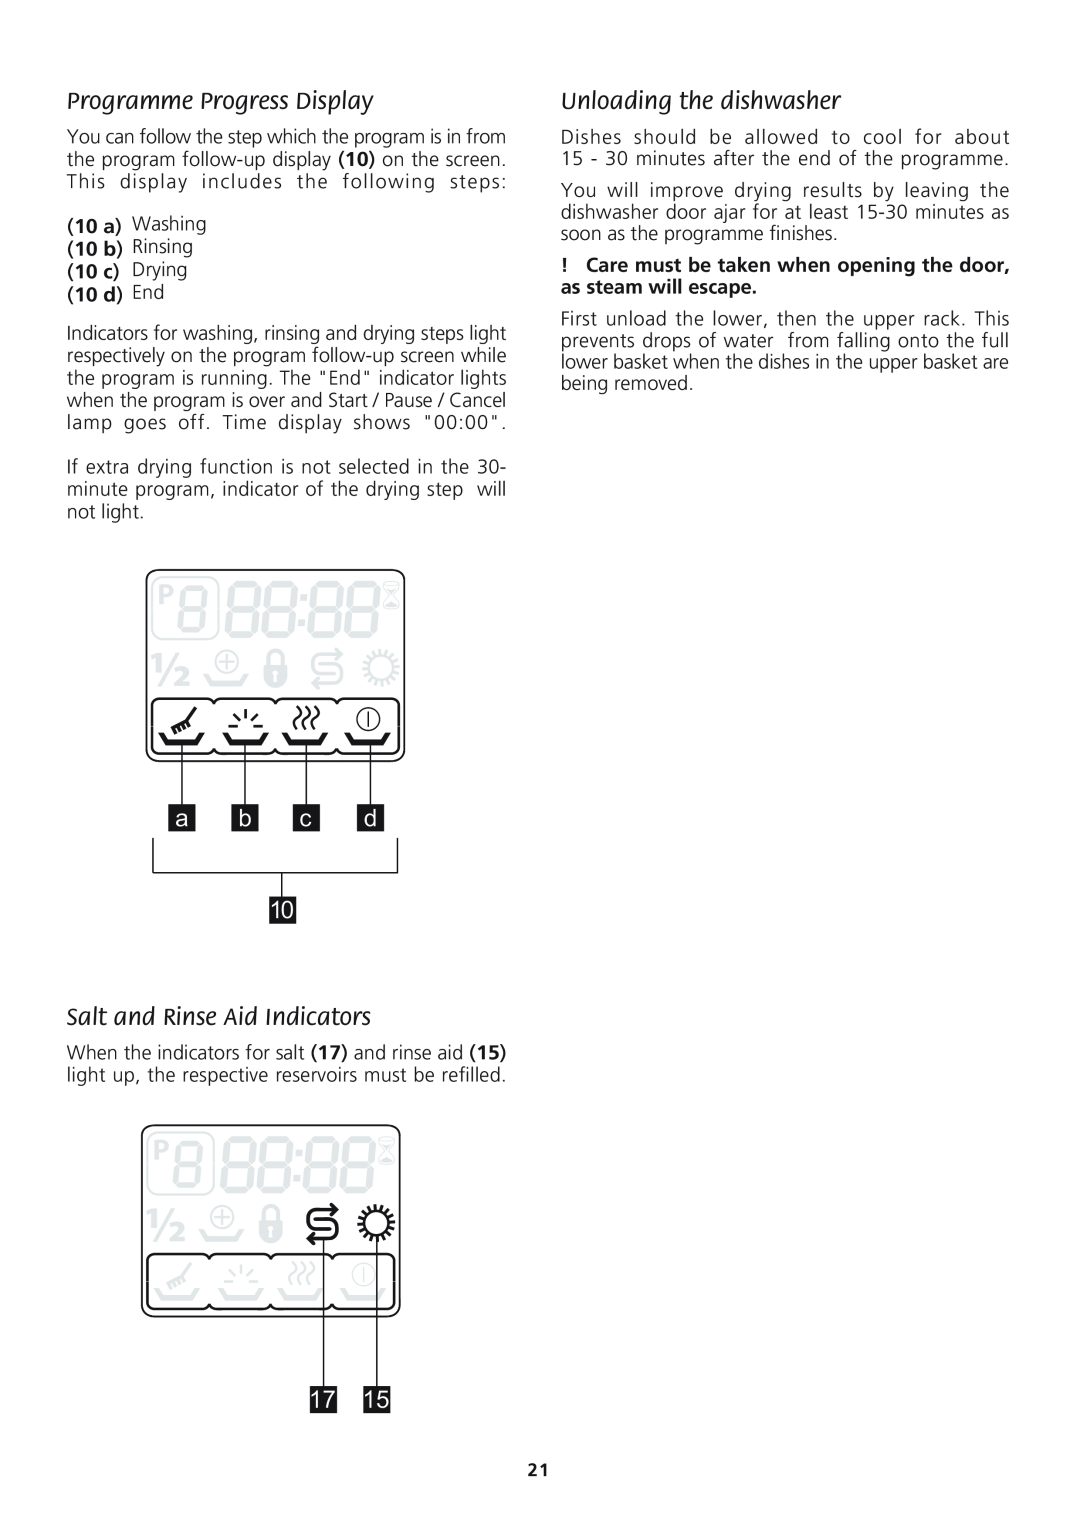 Beko DWD 8657 manual Programme Progress Display, Unloading the dishwasher, Salt and Rinse Aid Indicators, a b c d 